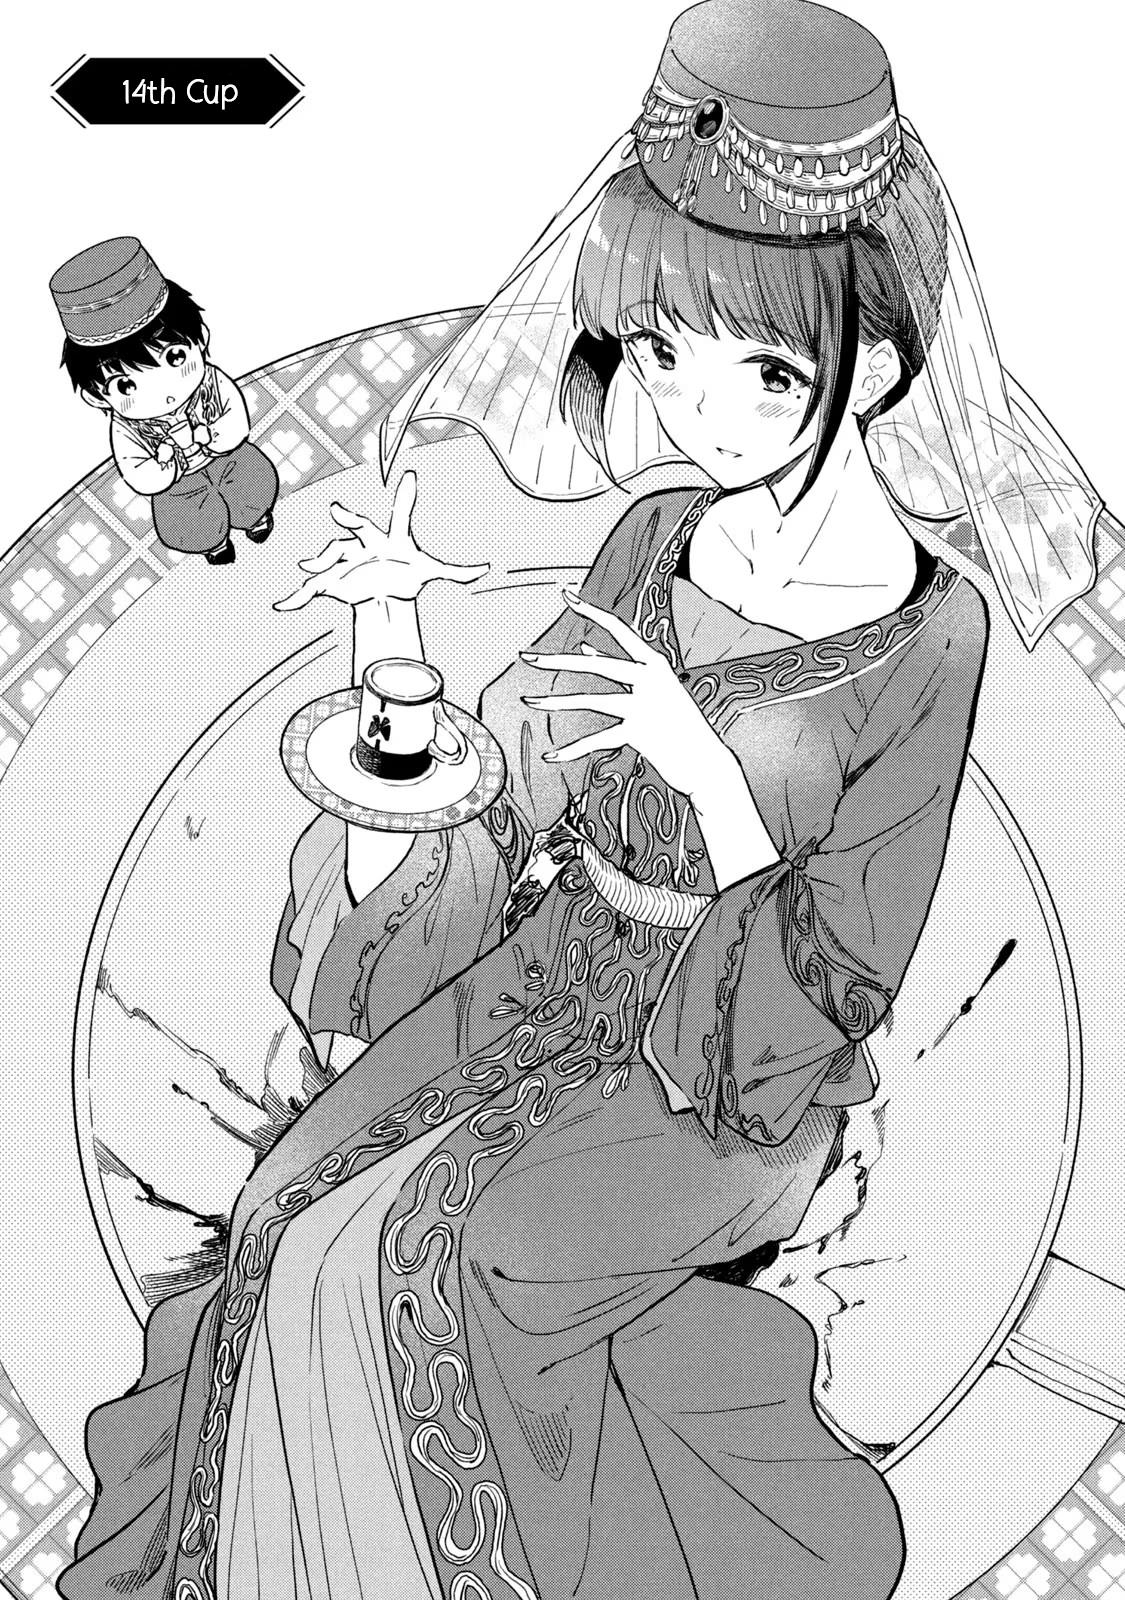 Coffee Wo Shizuka Ni Vol.3 Chapter 14: Cup 14 - Picture 1